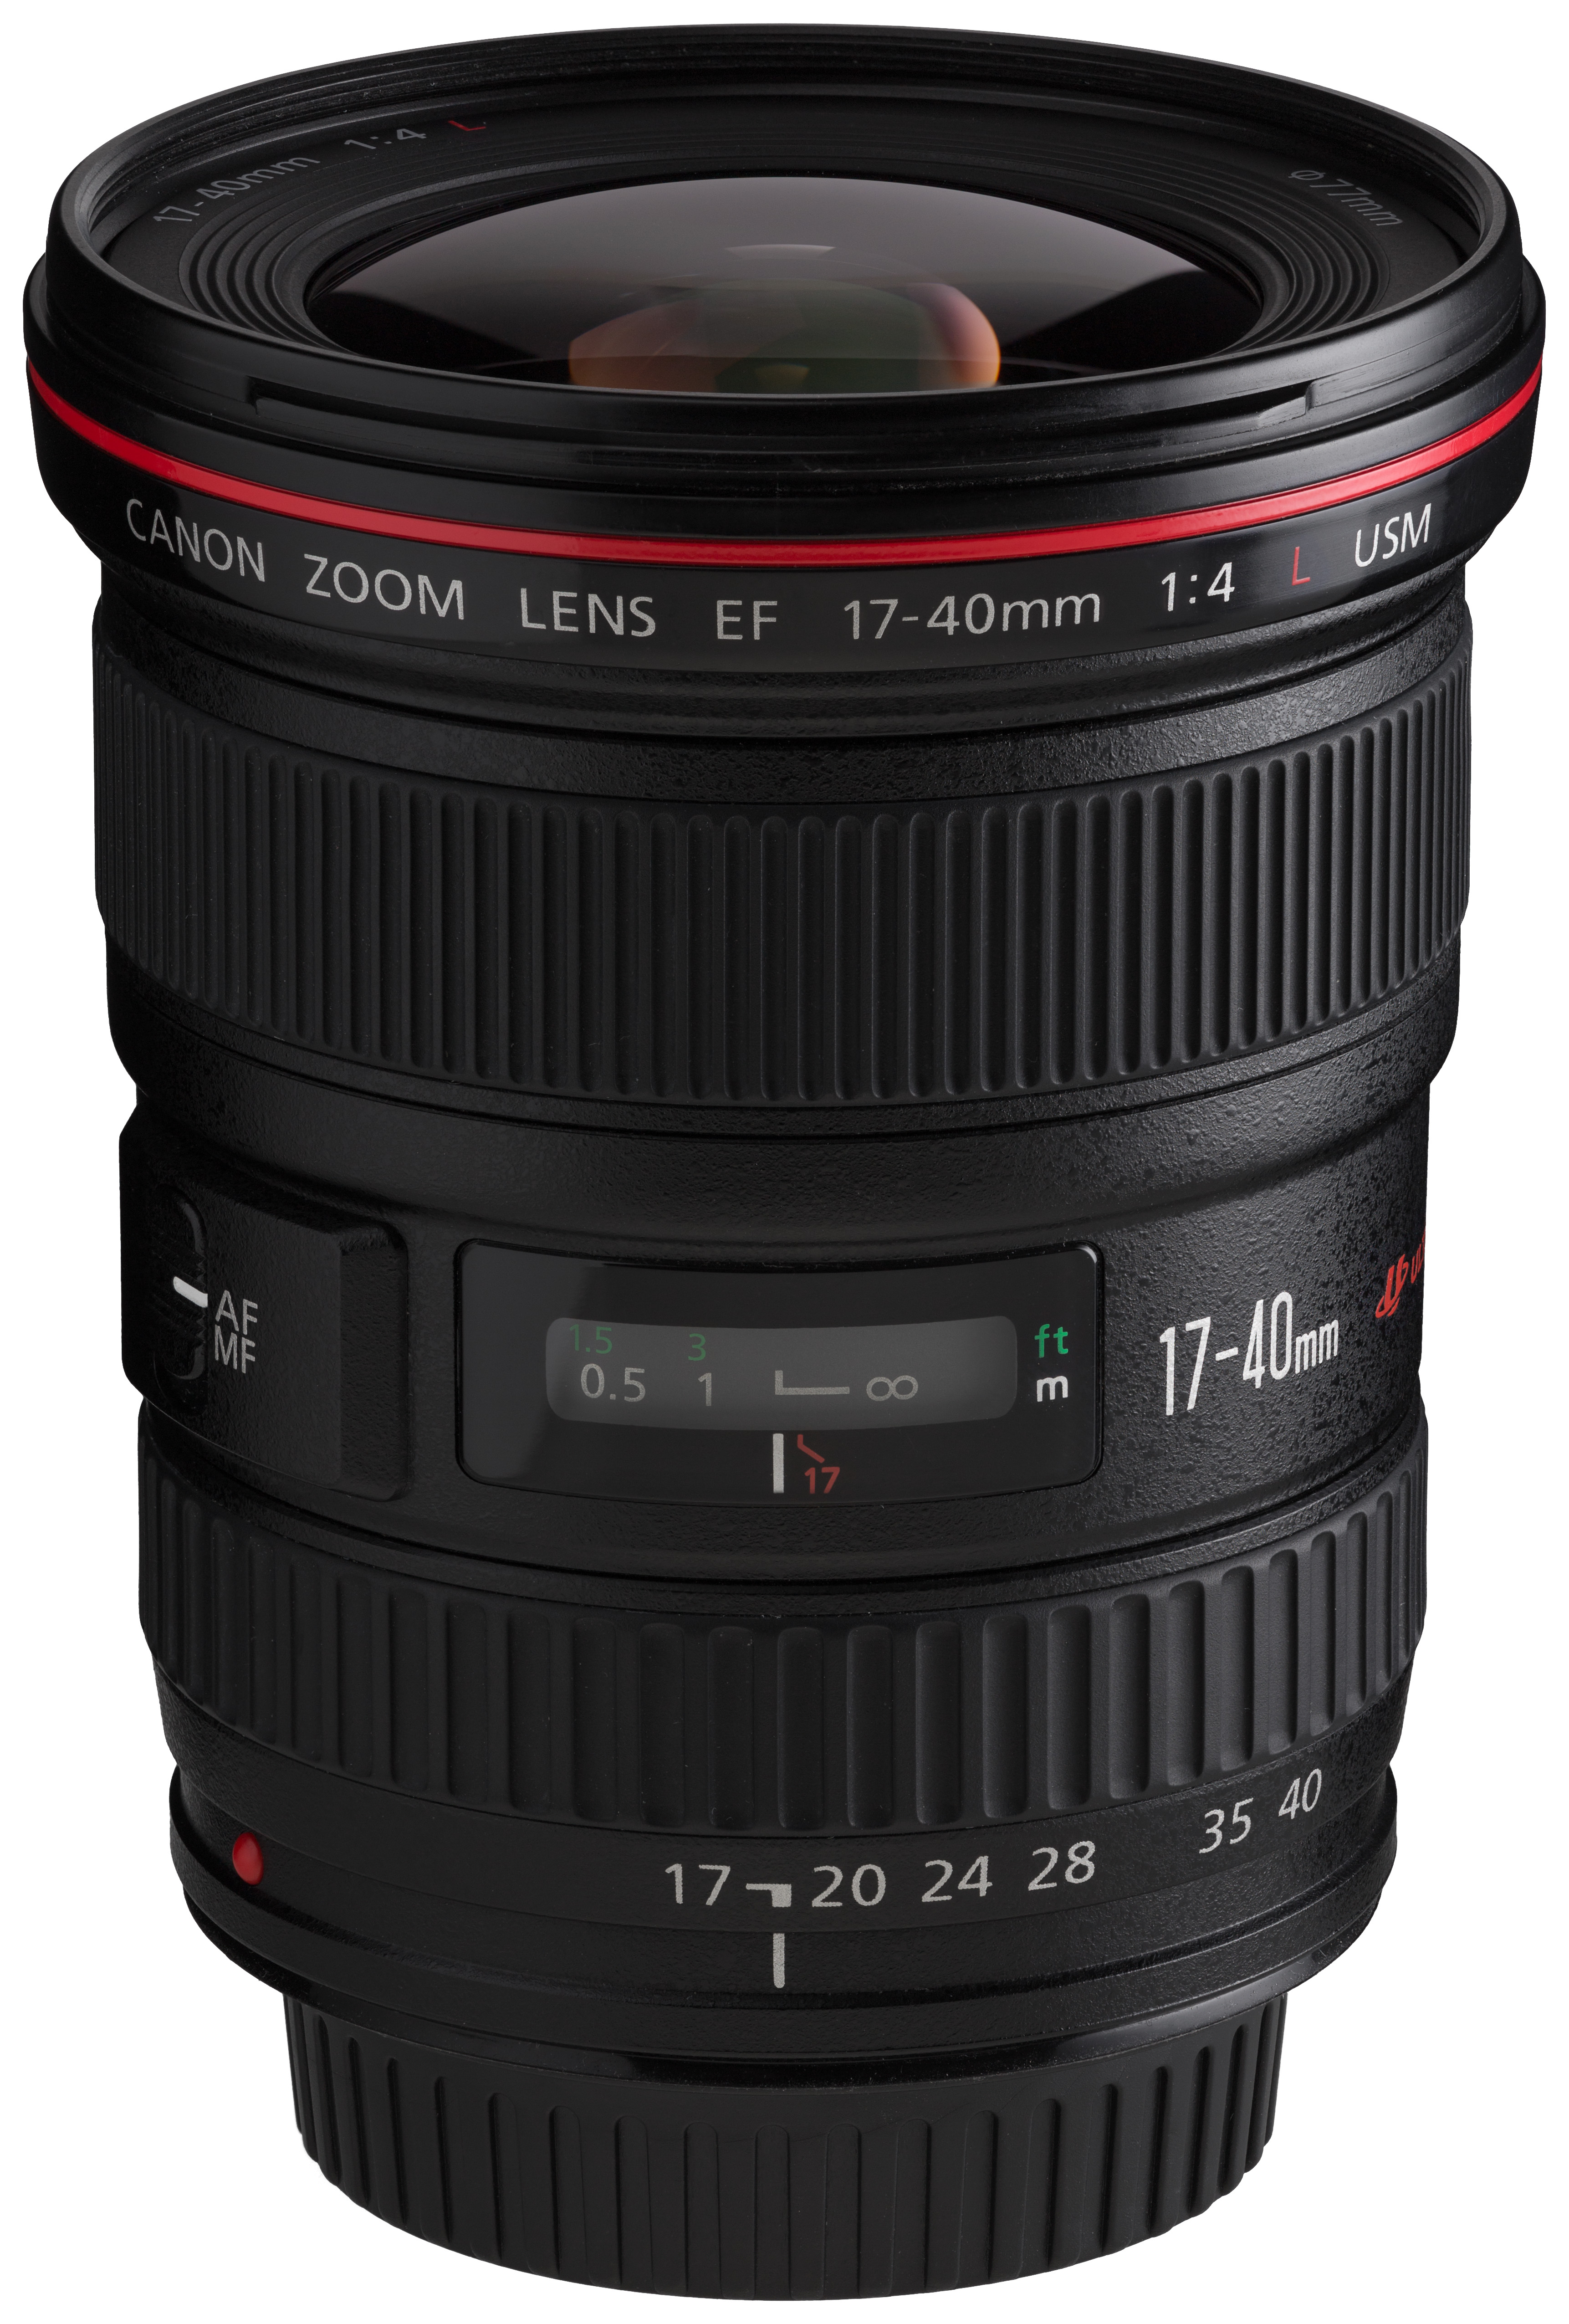 Canon EF 17-40mm lens - Wikipedia